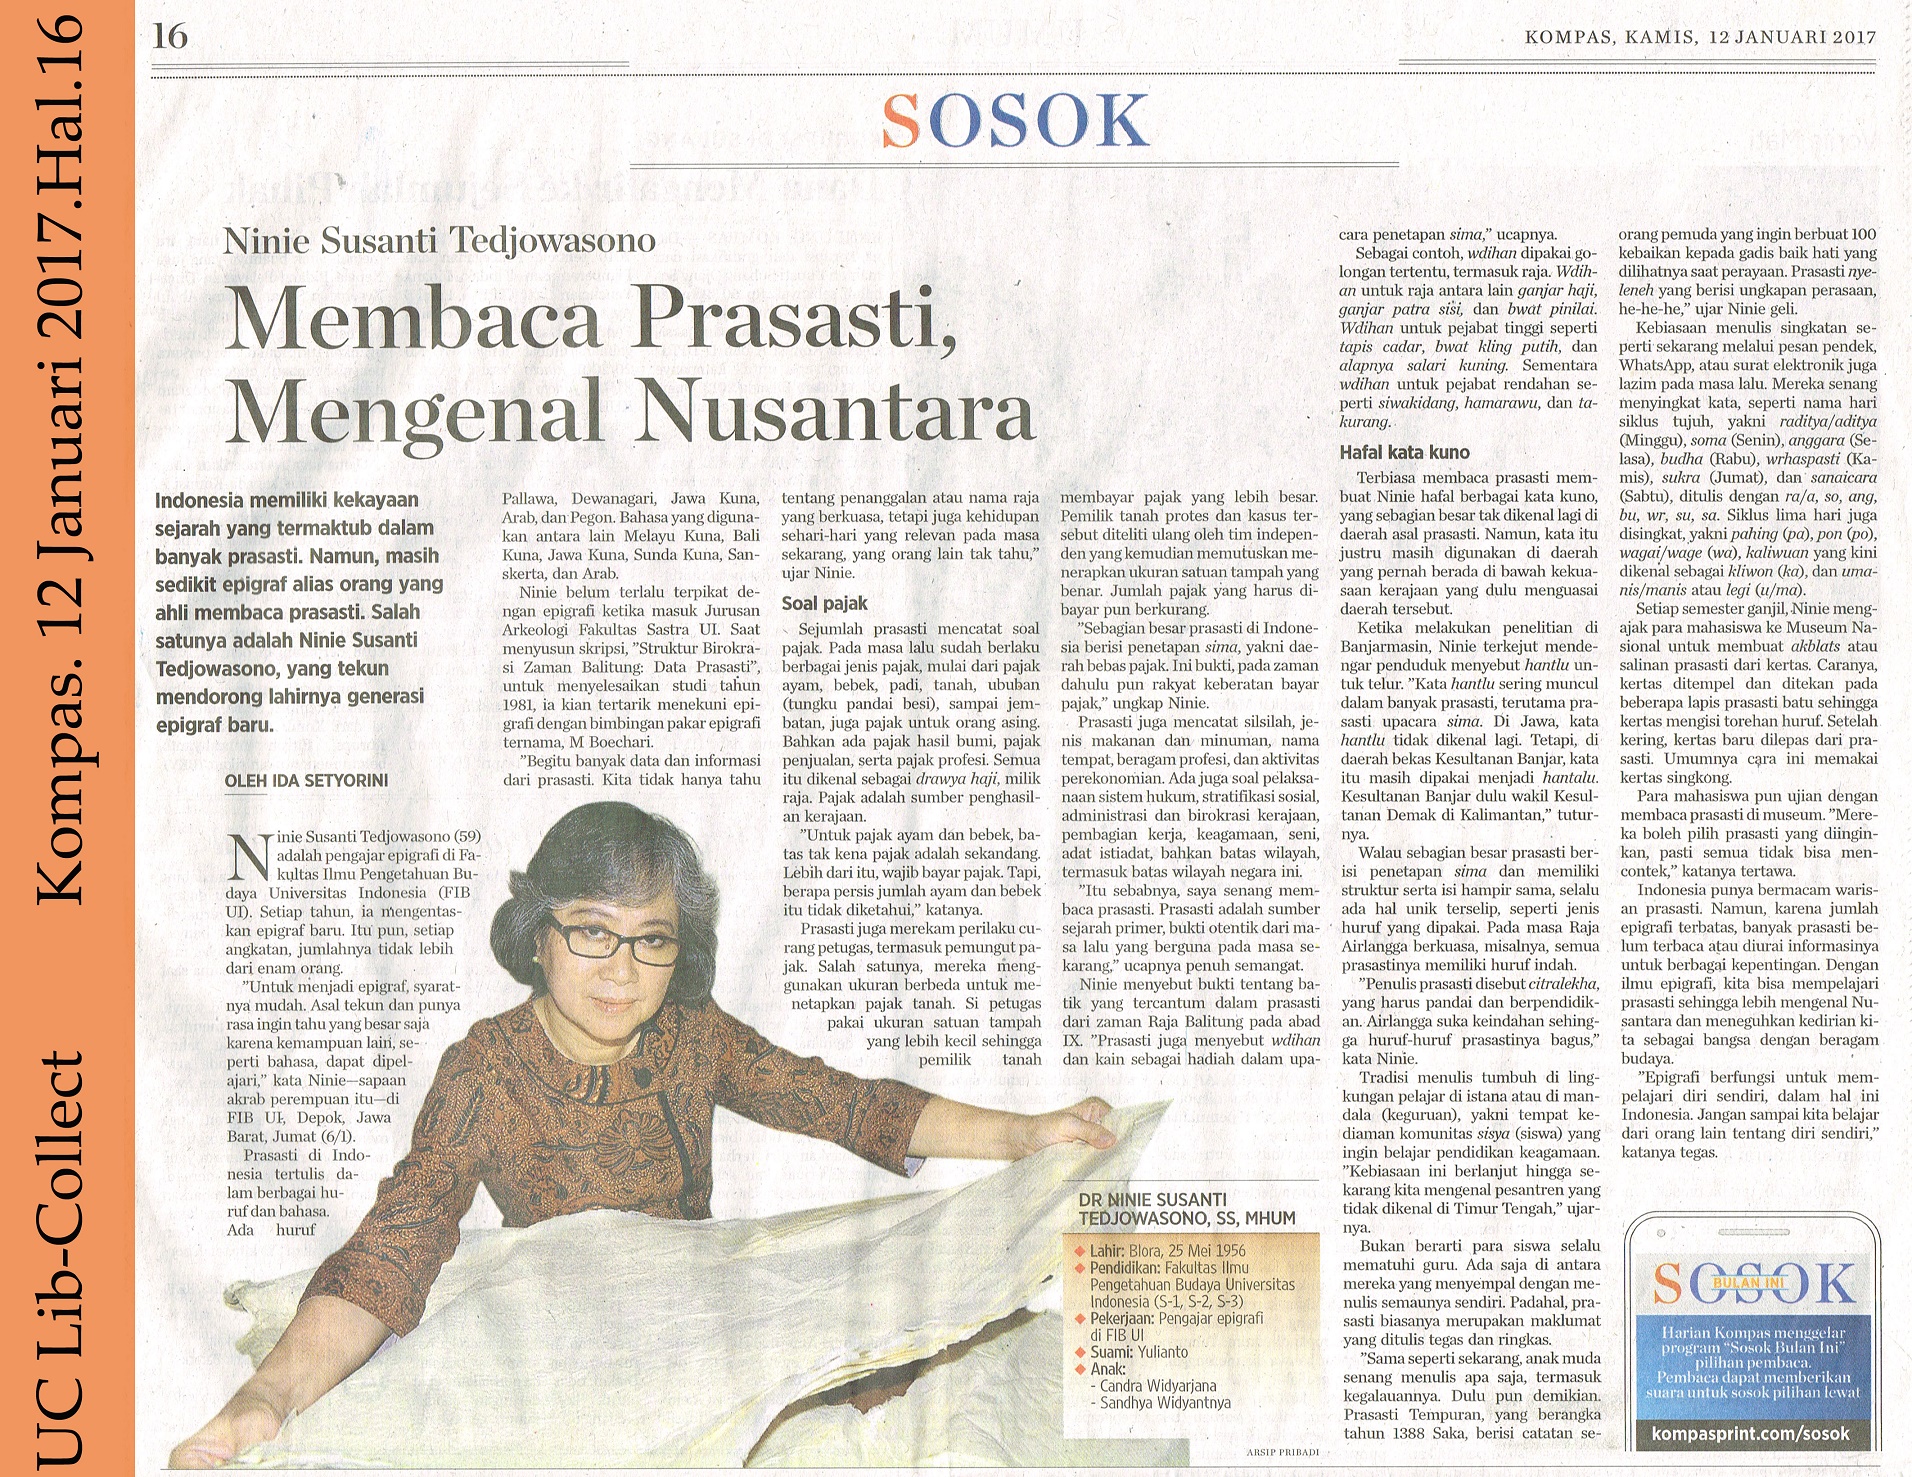 Ninie Susanti Tedjowasono Membaca Prasasti Mengenal Nusantara